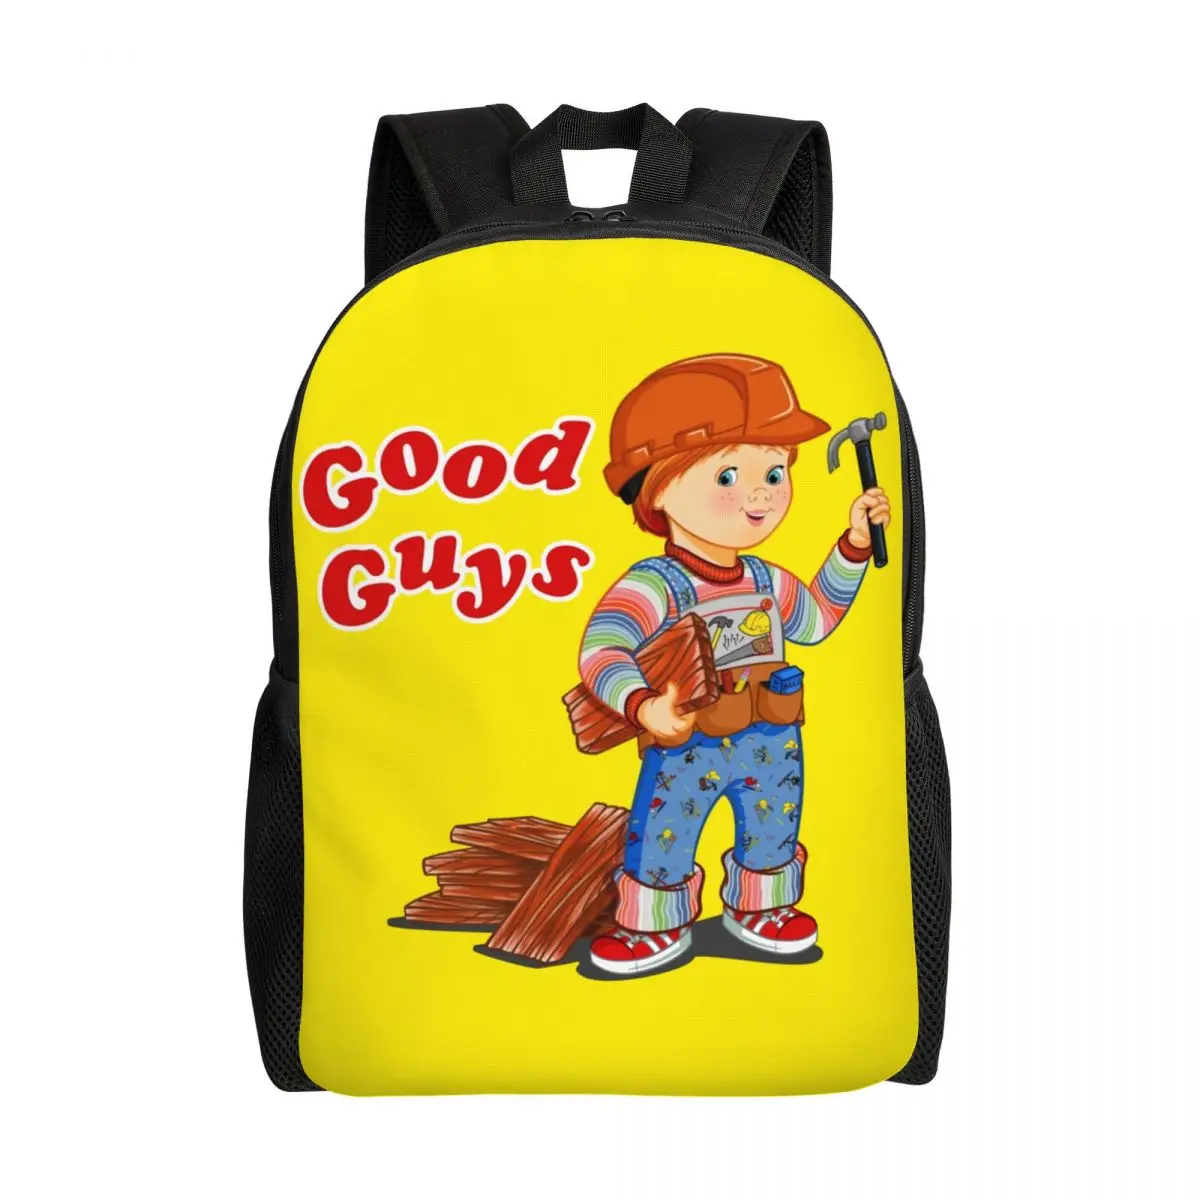 

Good Guys Construction Worker Laptop Backpack Women Men Casual Bookbag College School Students Child's Play Chucky Cartoon Bags